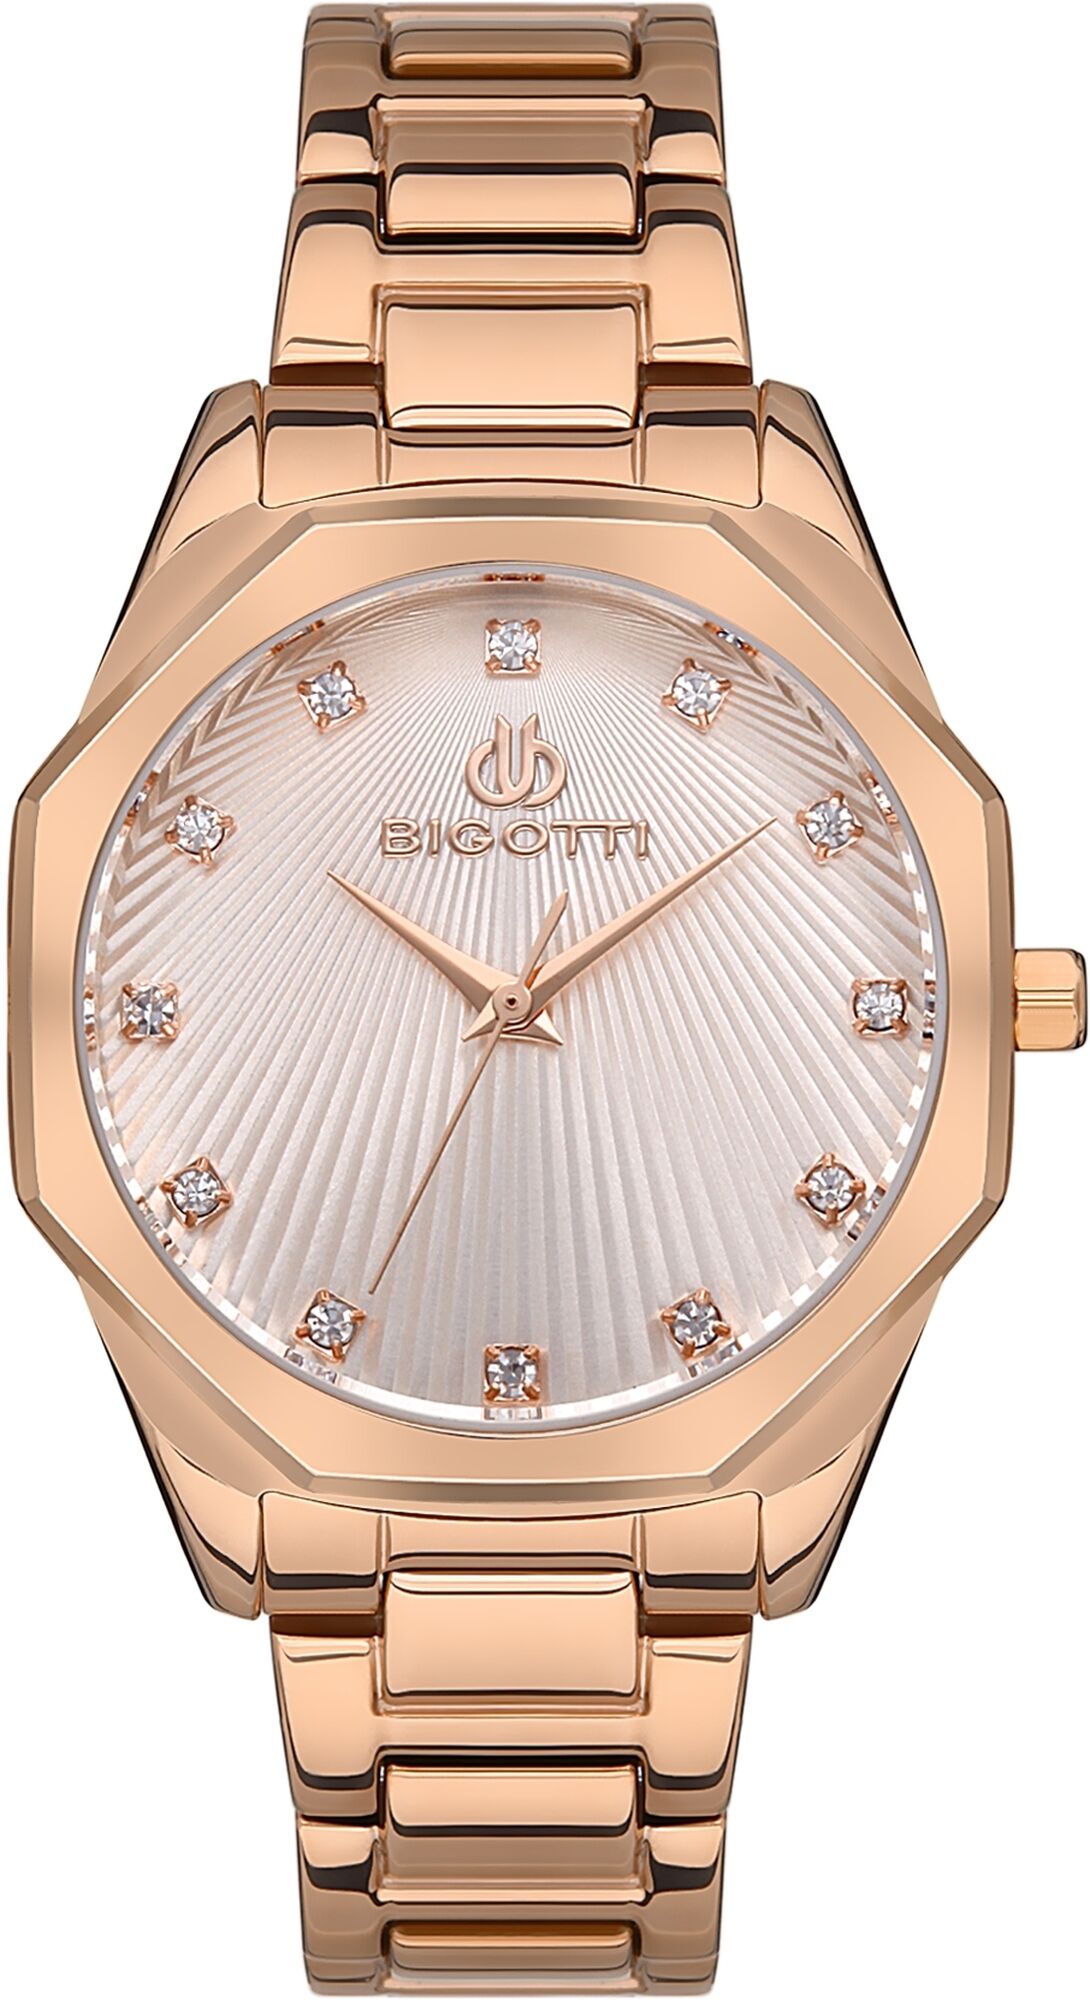 Женские часы Bigotti BG.1.10466-2